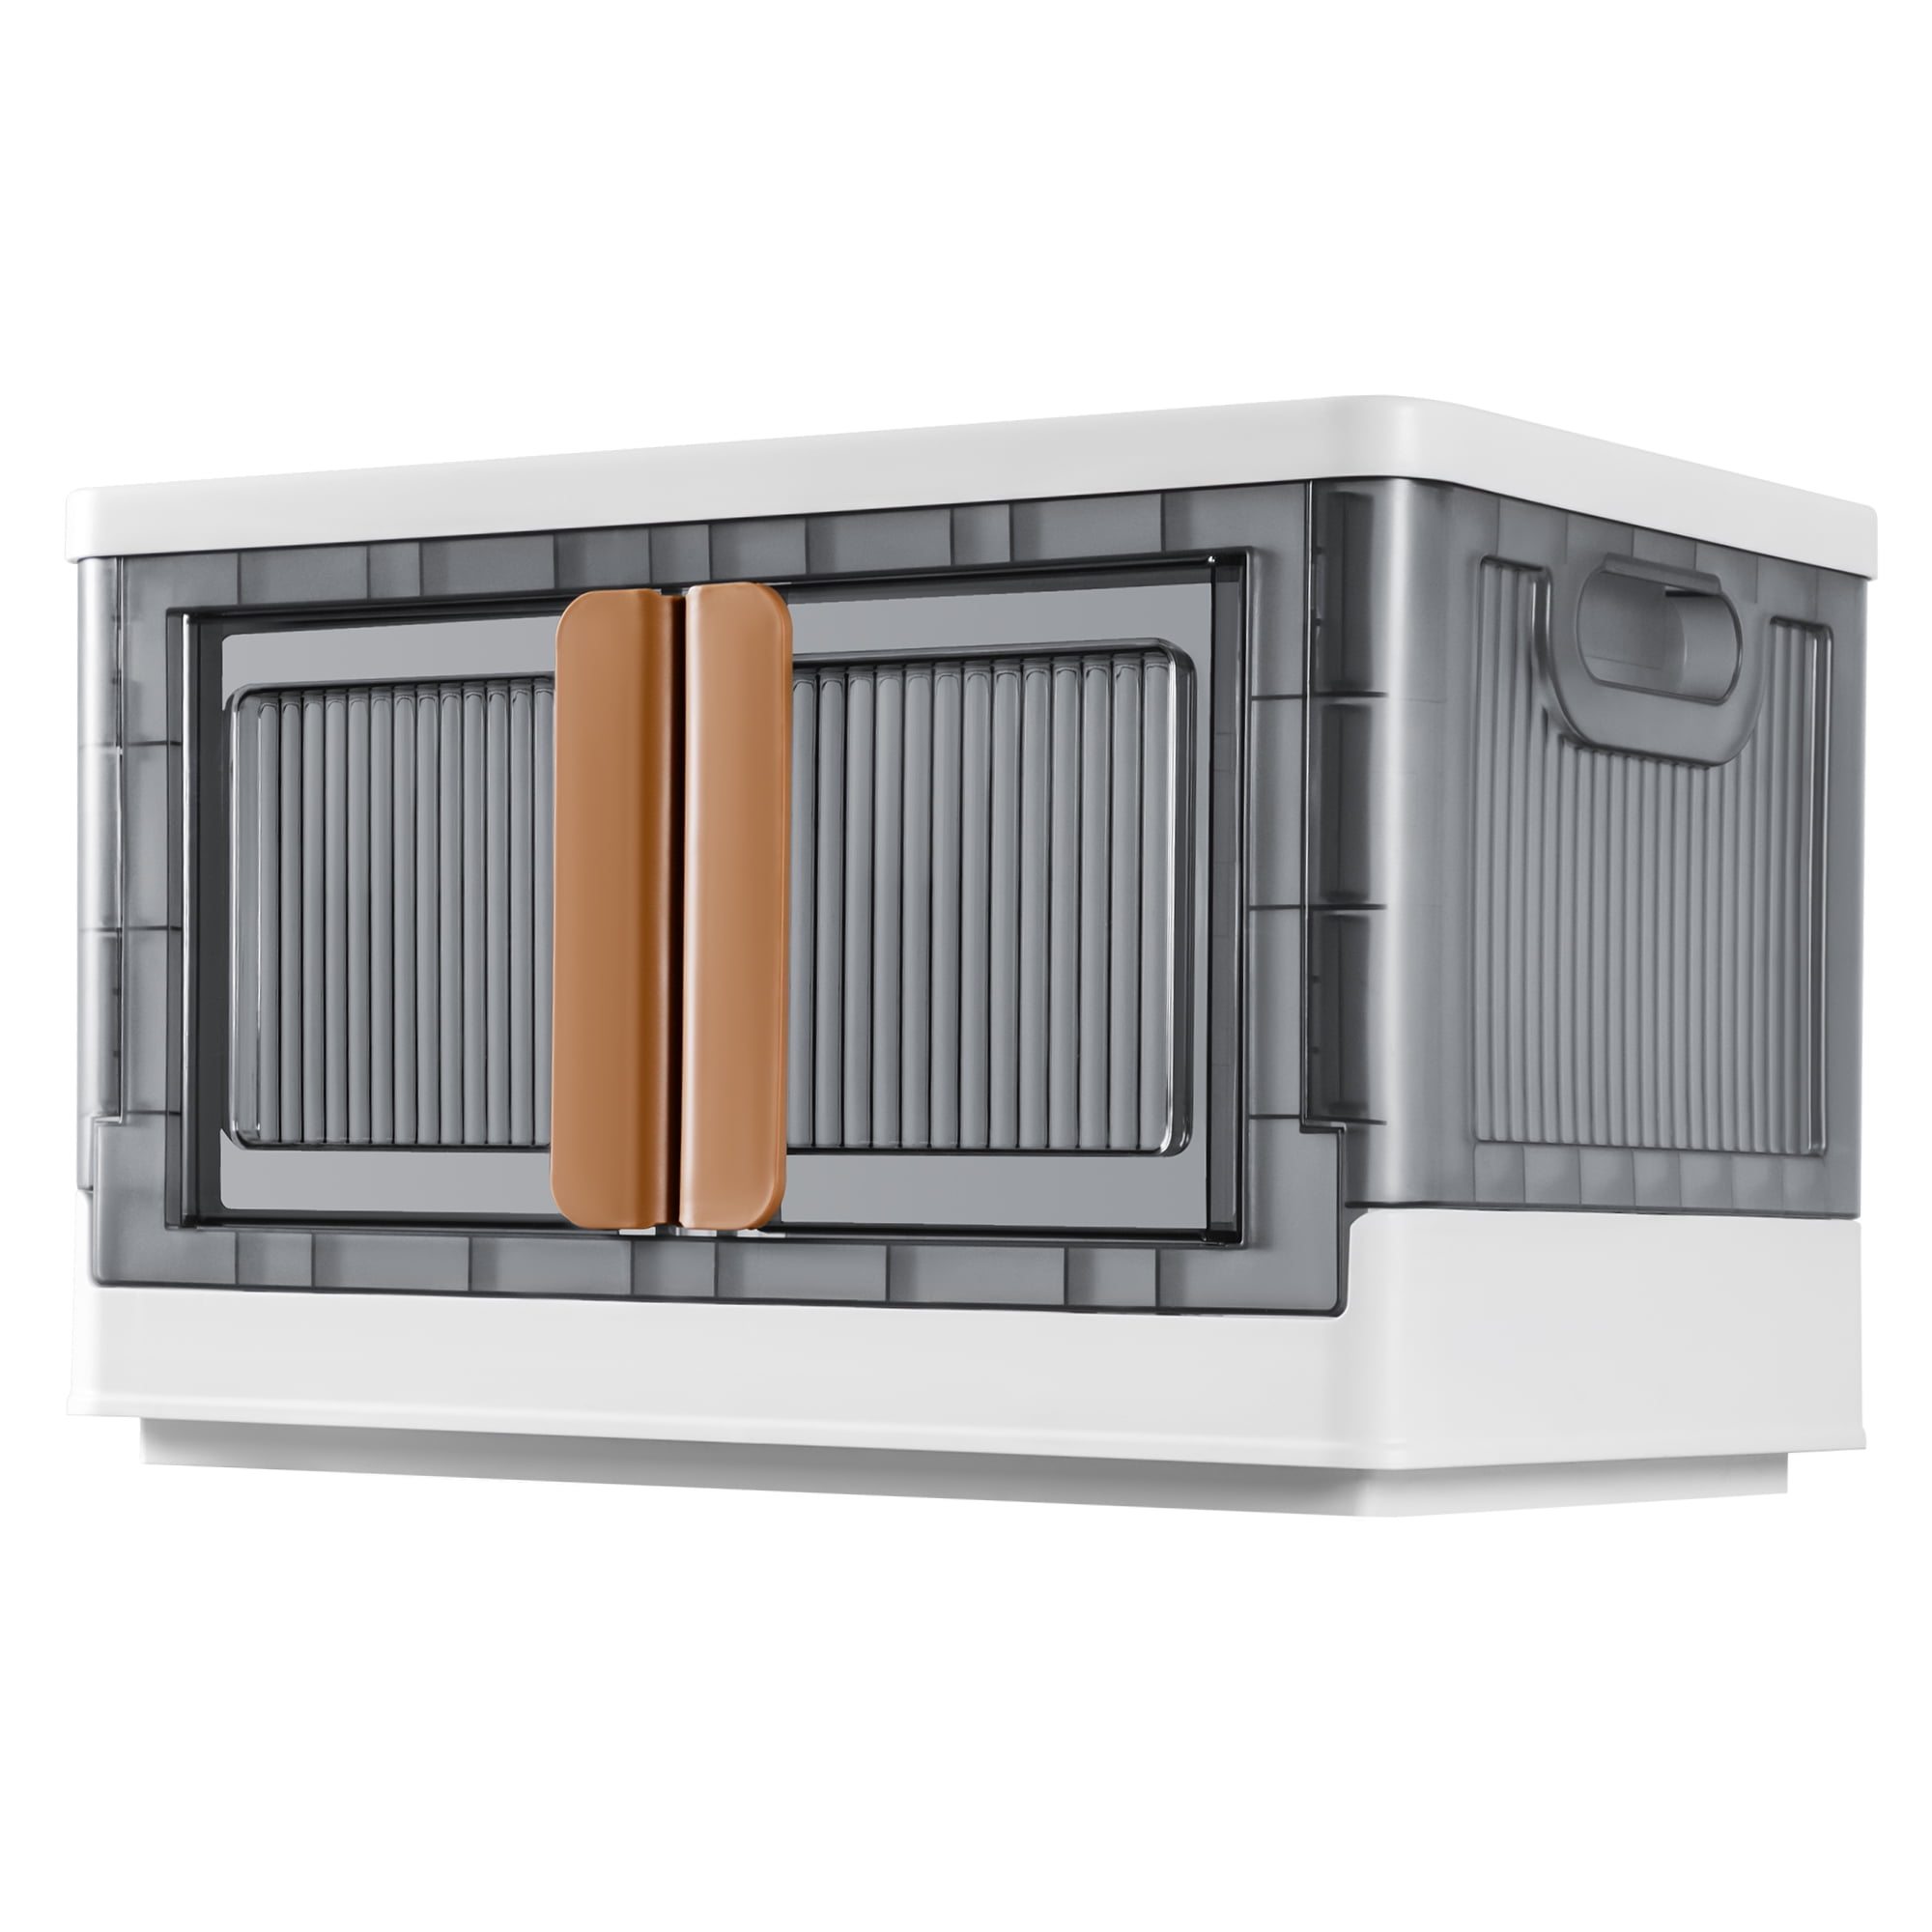 Large Capacity Folding Storage Bins Cabinet Household Portable